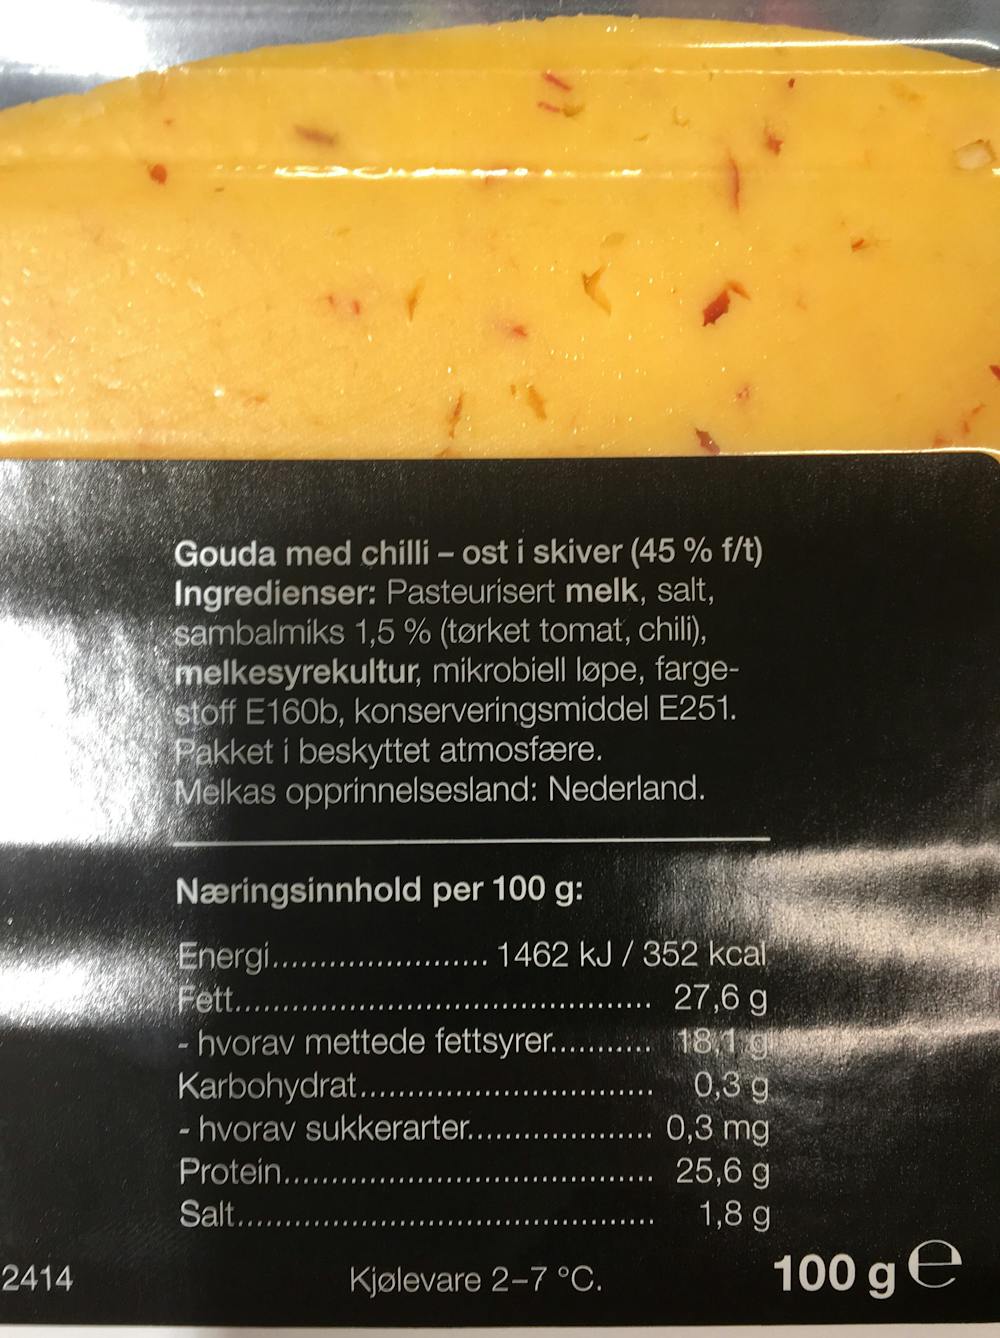 Ingredienslisten til Eldorado Gouda ost i skiver med chili